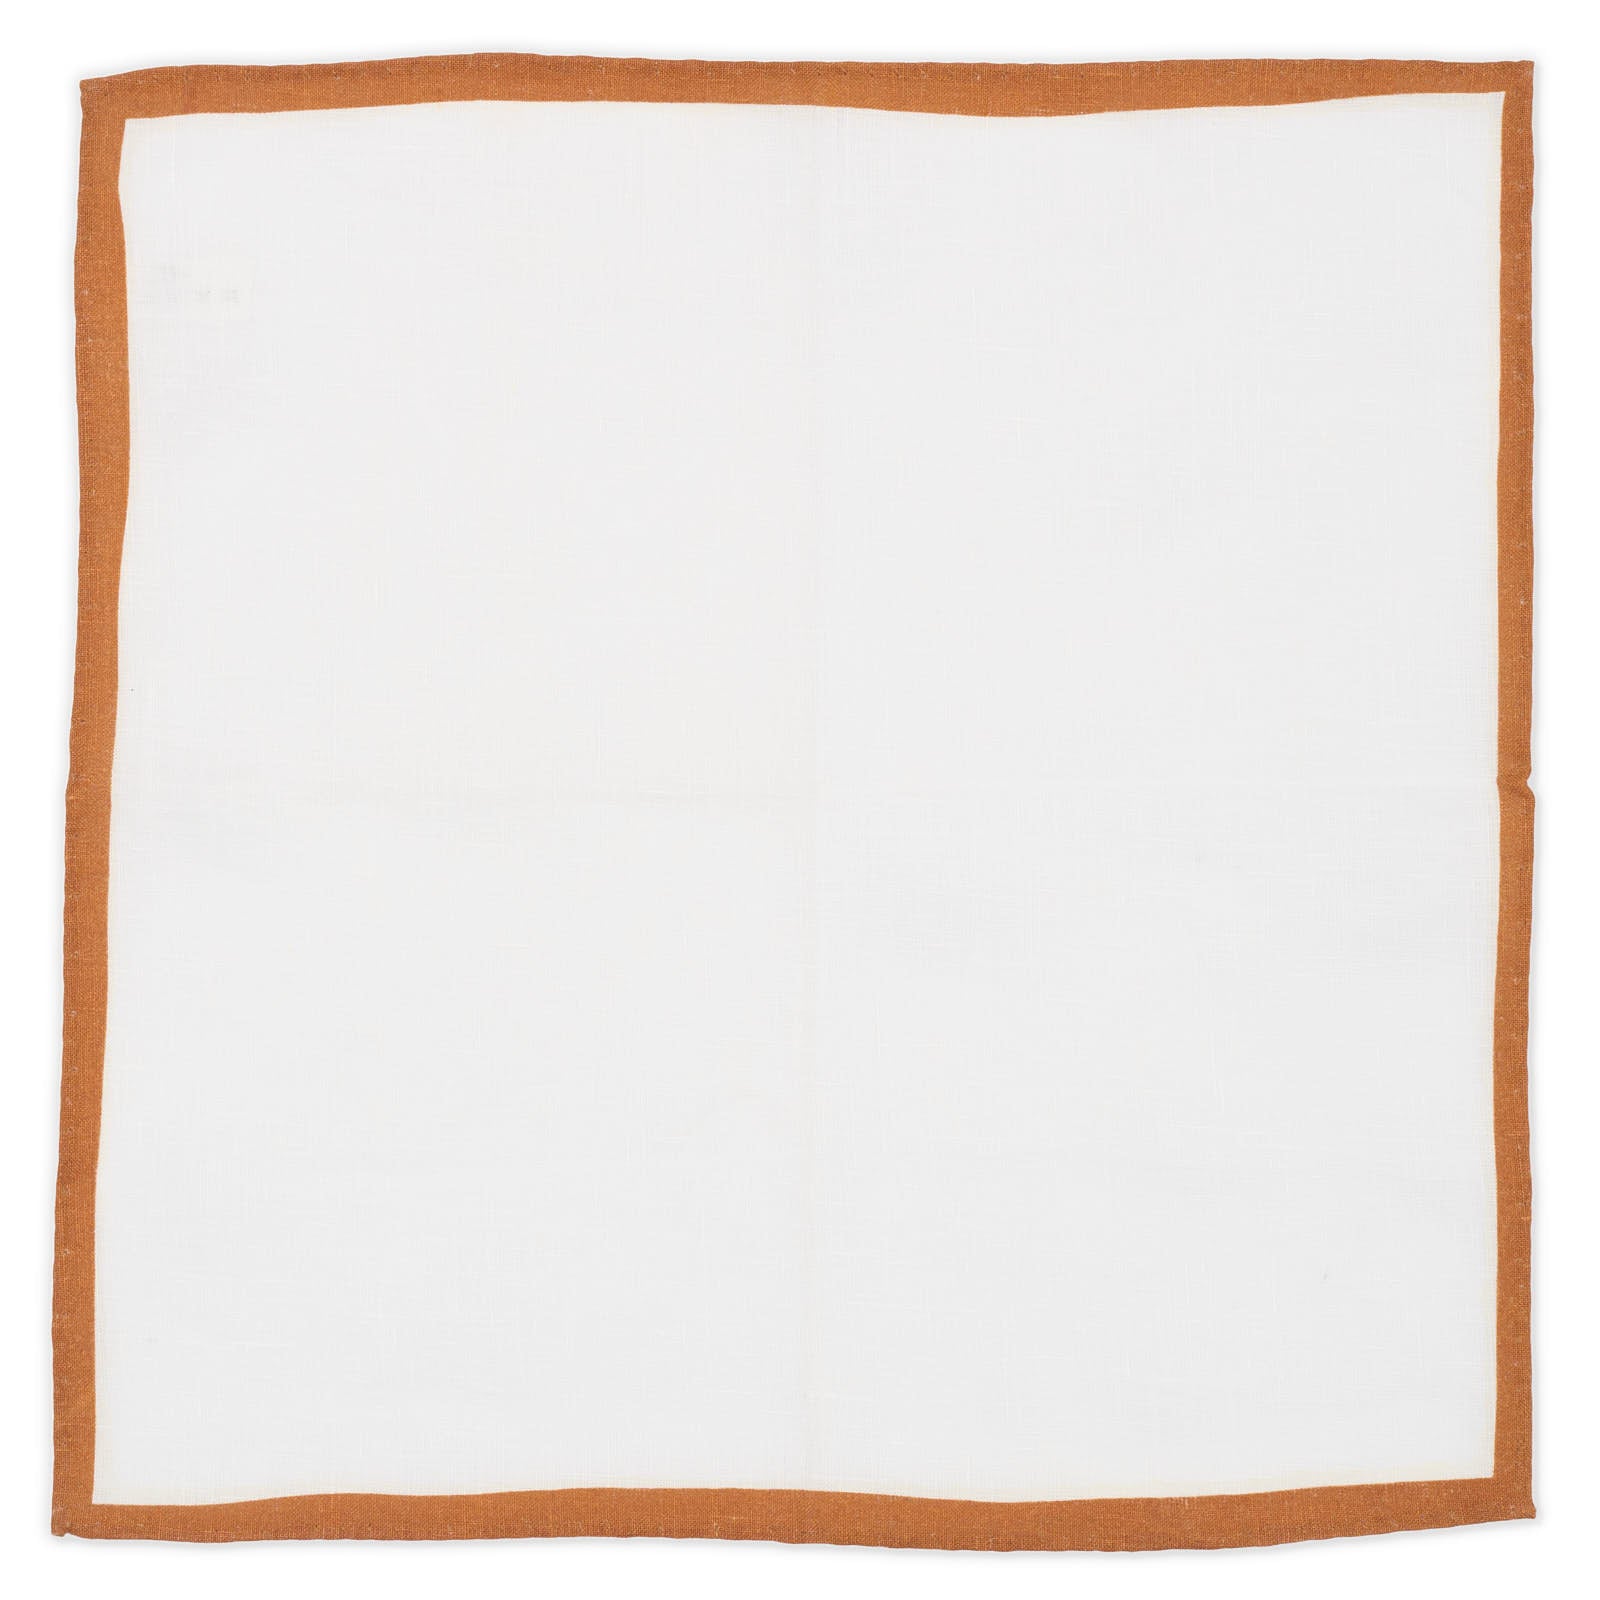 VANNUCCI Milano Handmade White-Brown Linen Pocket Square NEW 32cm x 32cm